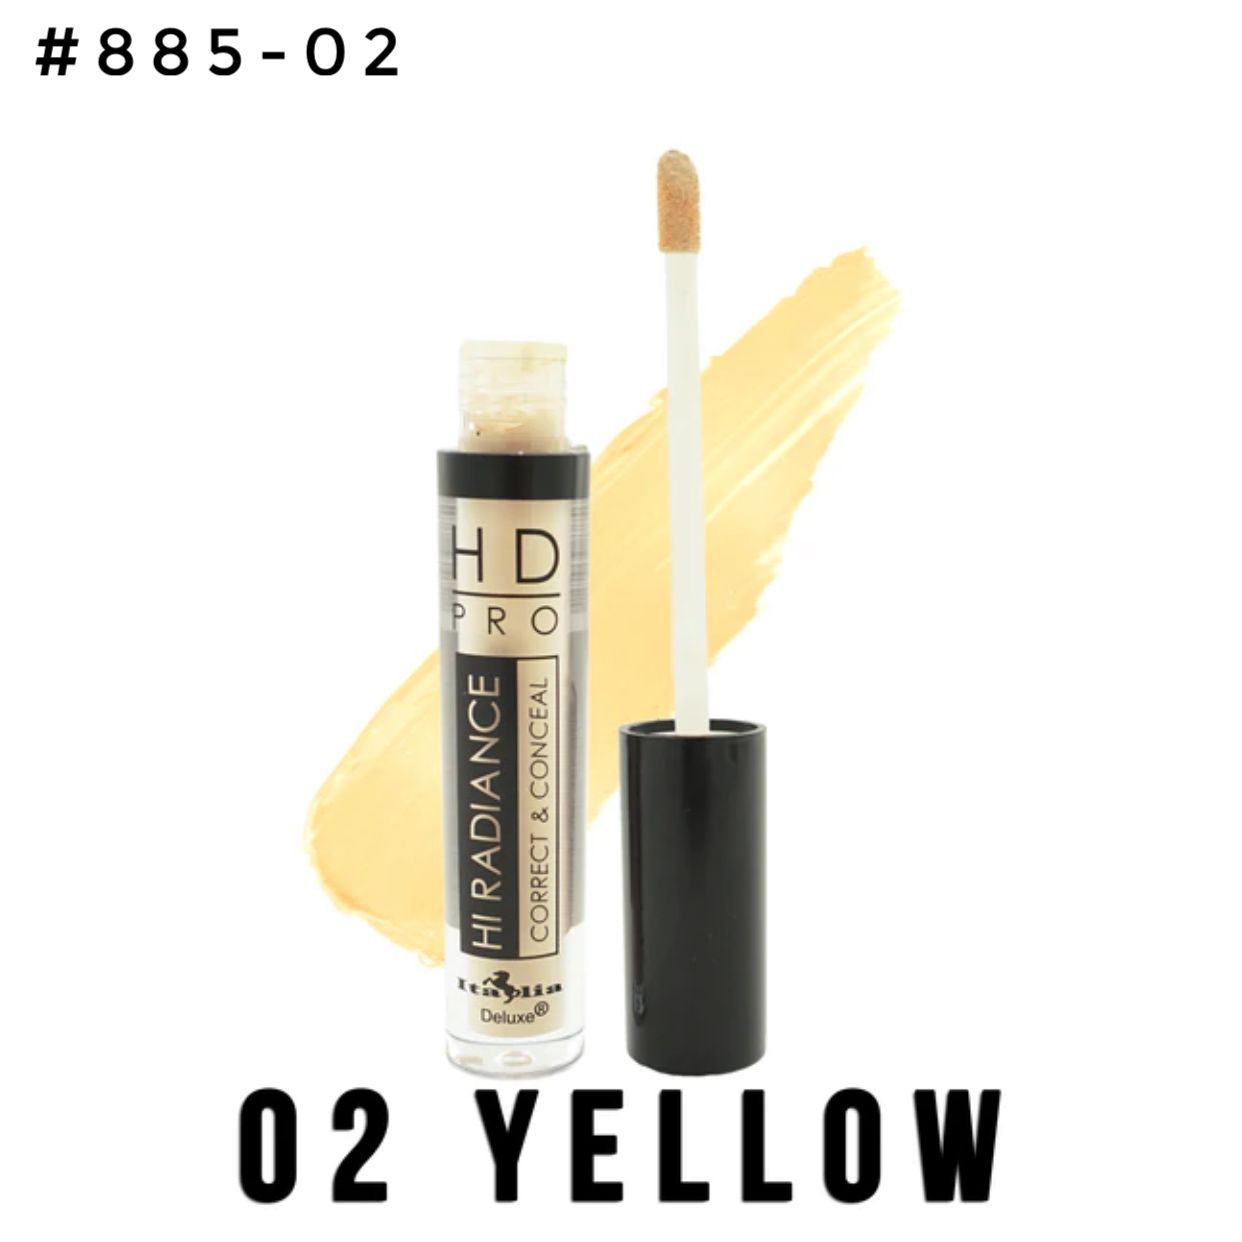 Hi radiance correct y conceal tono: yellow 02 italia